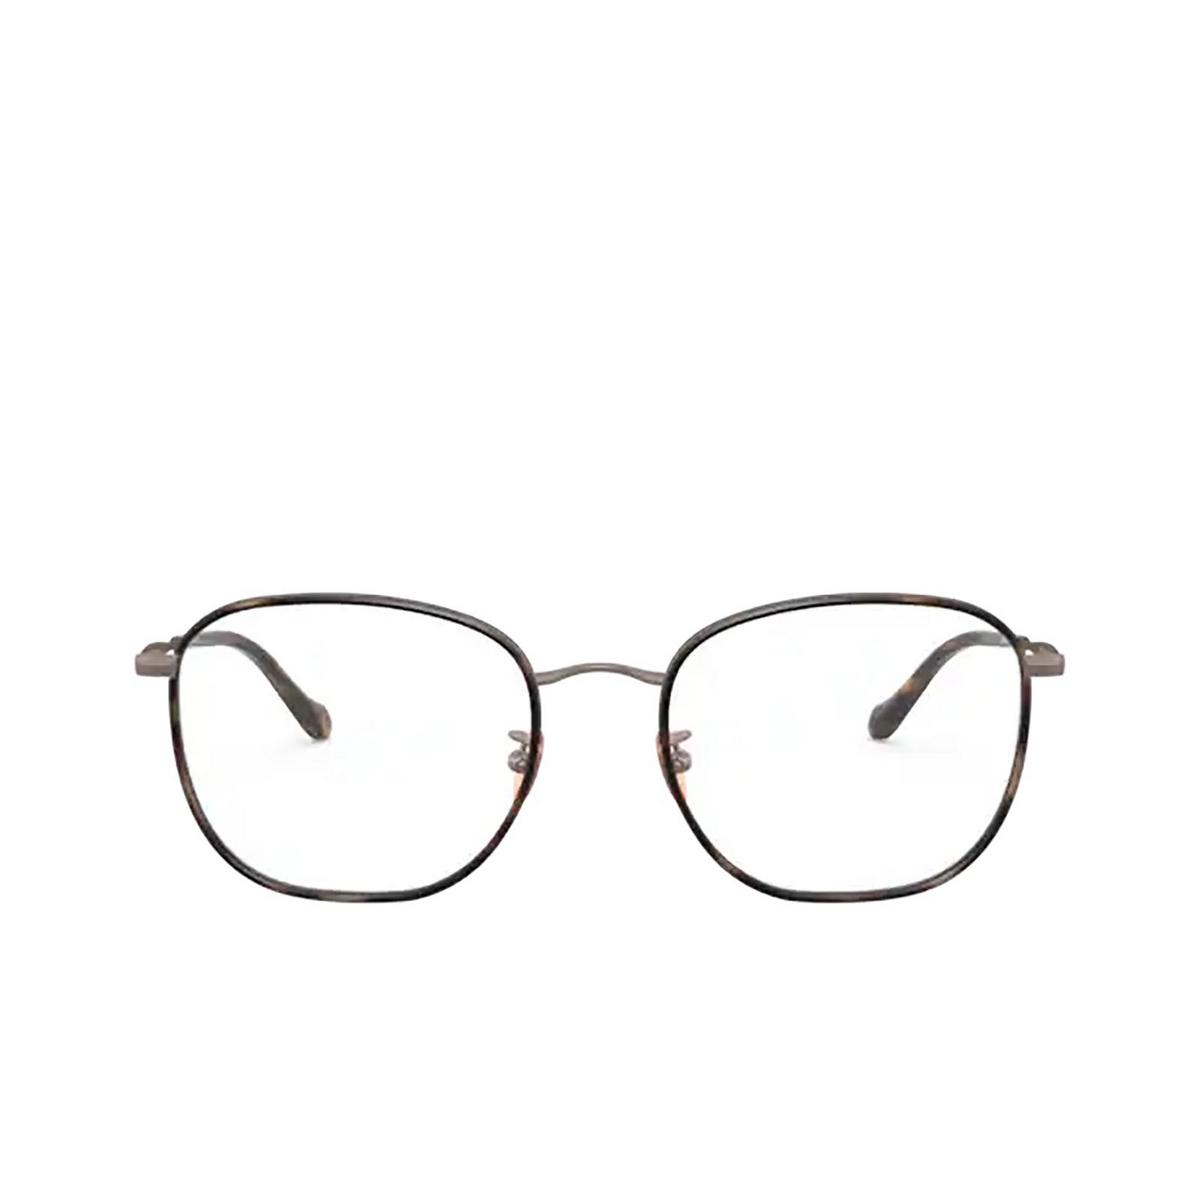 Giorgio Armani® Square Eyeglasses: AR5105J color Brown Havana / Bronze 3006 - front view.